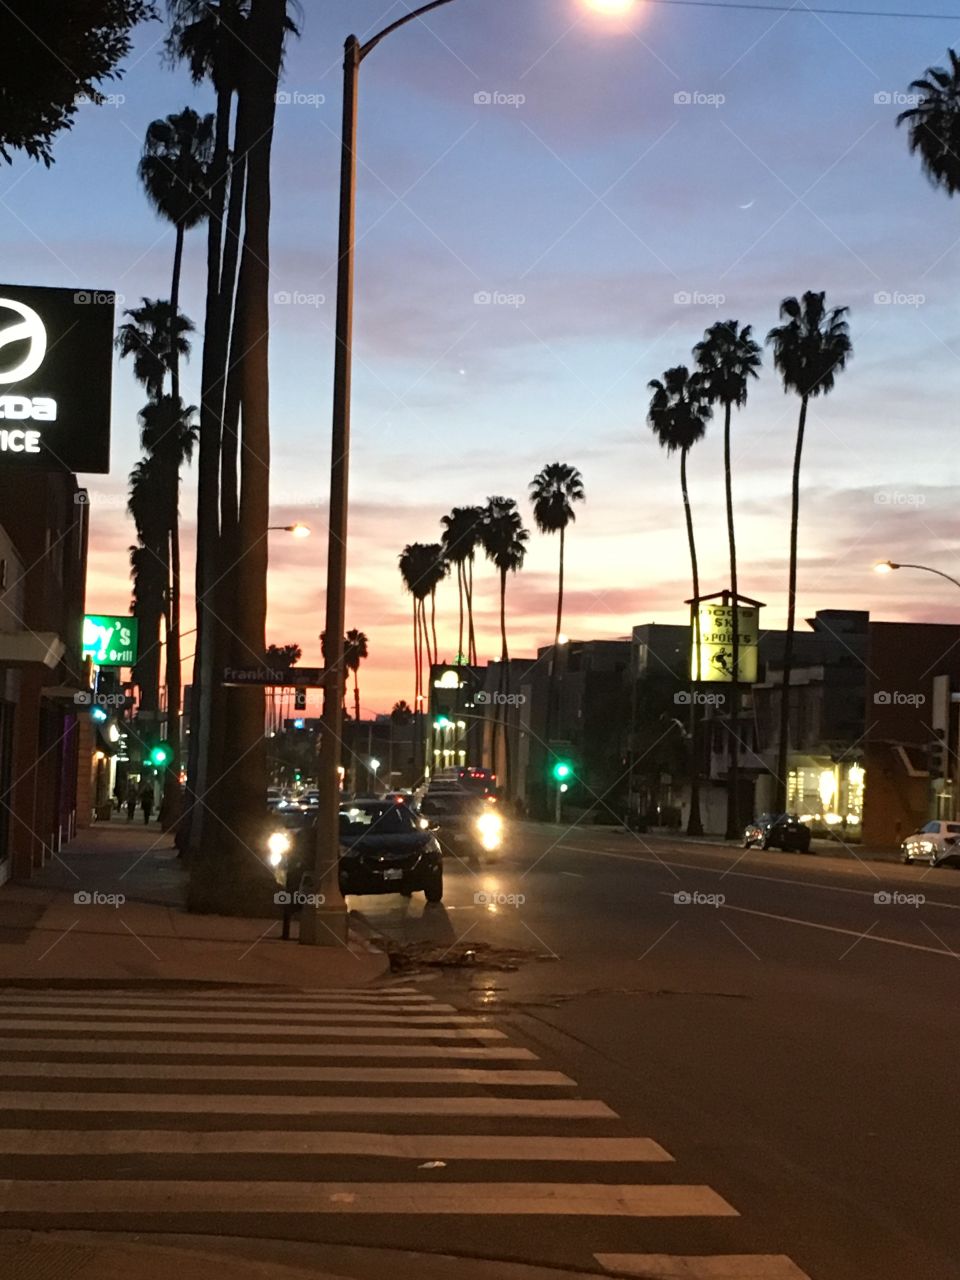 Sunset on a beautiful LA night. Santa Monica. Chill vibe. Happy people. Warm, relaxing, beach town